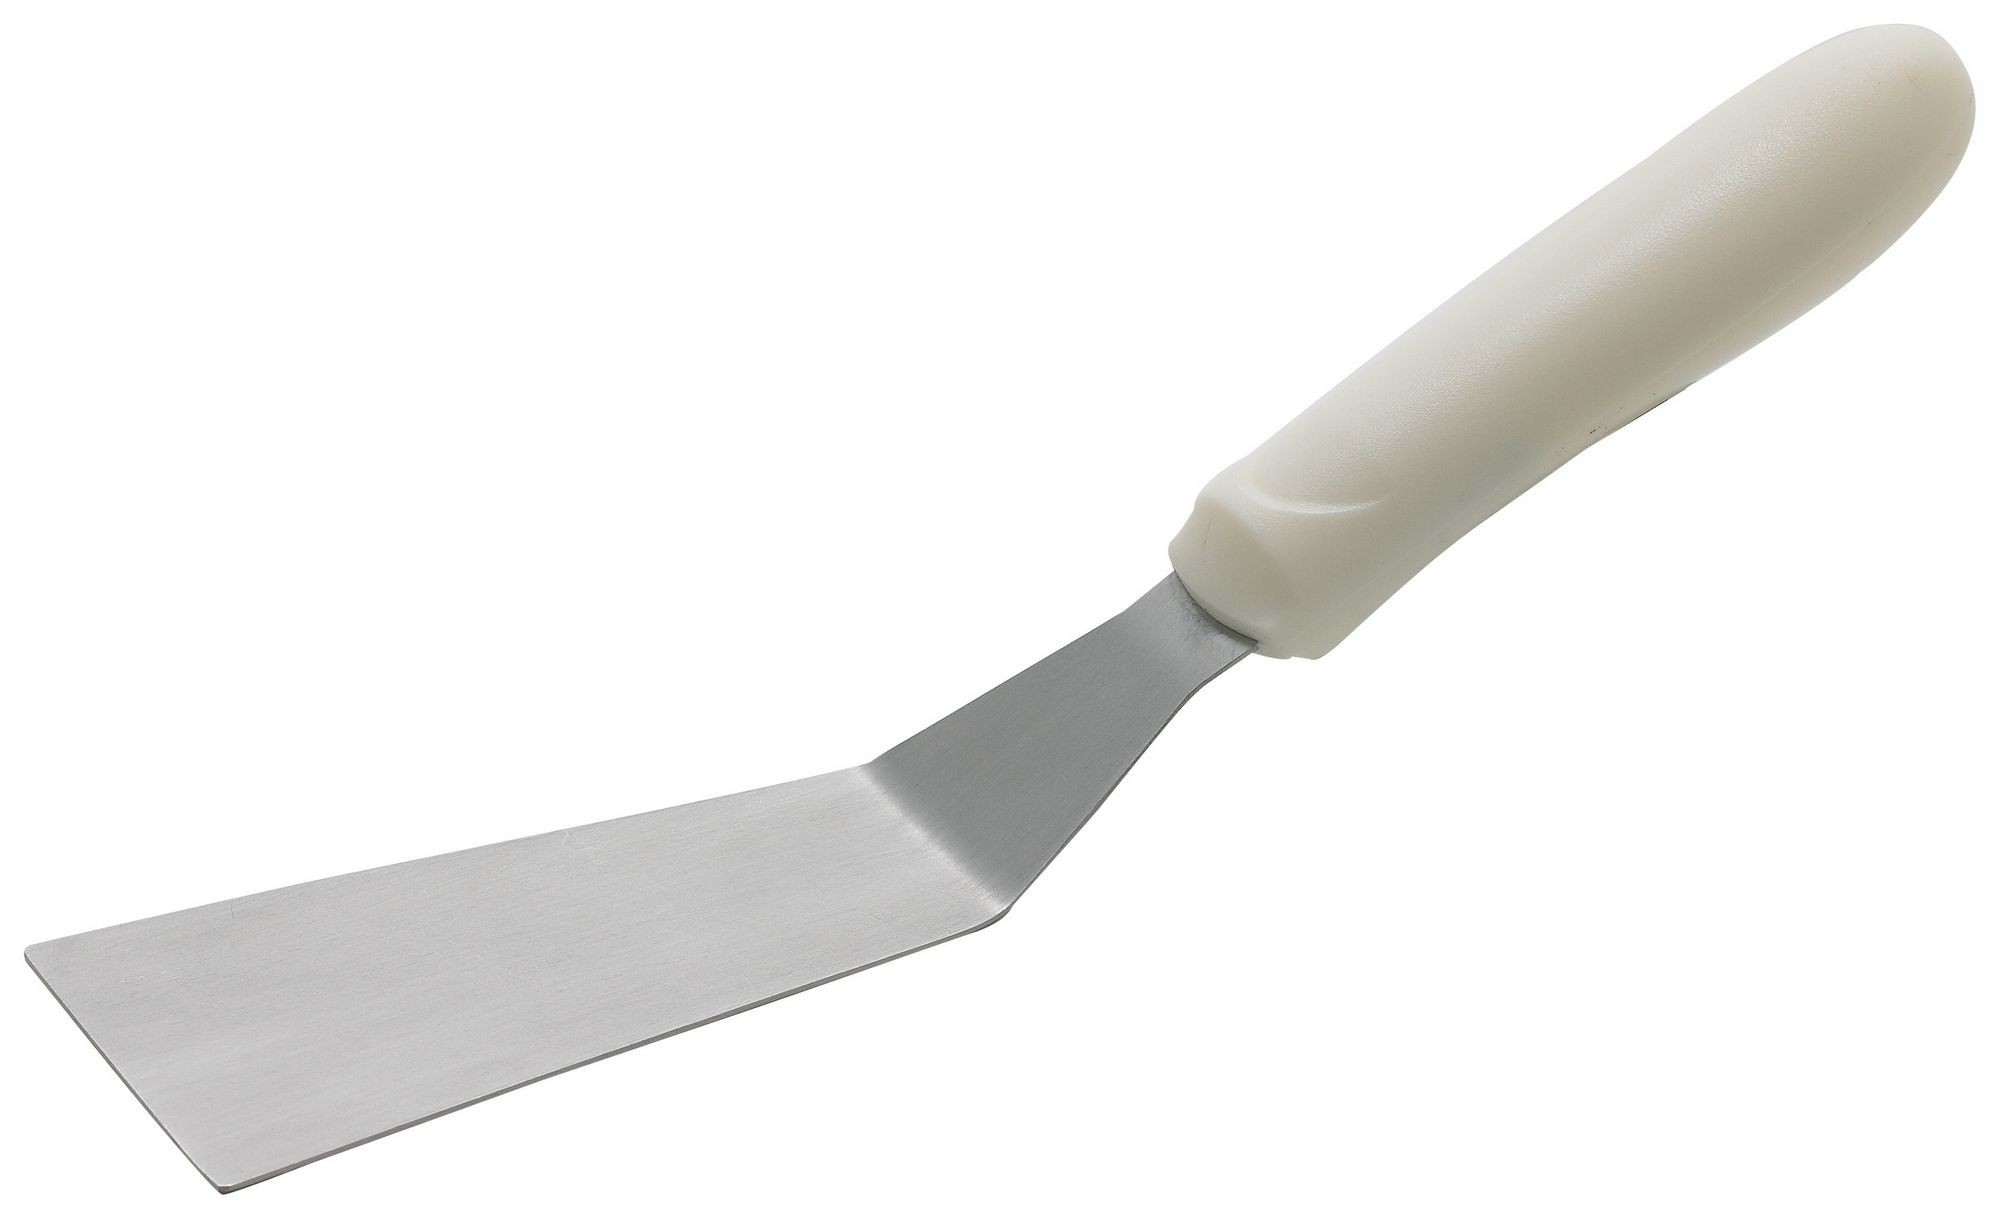 Winco TWP-50 Grill Spatula, 5 1/2" x 2 1/2" Blade, White Polypropylene Handle